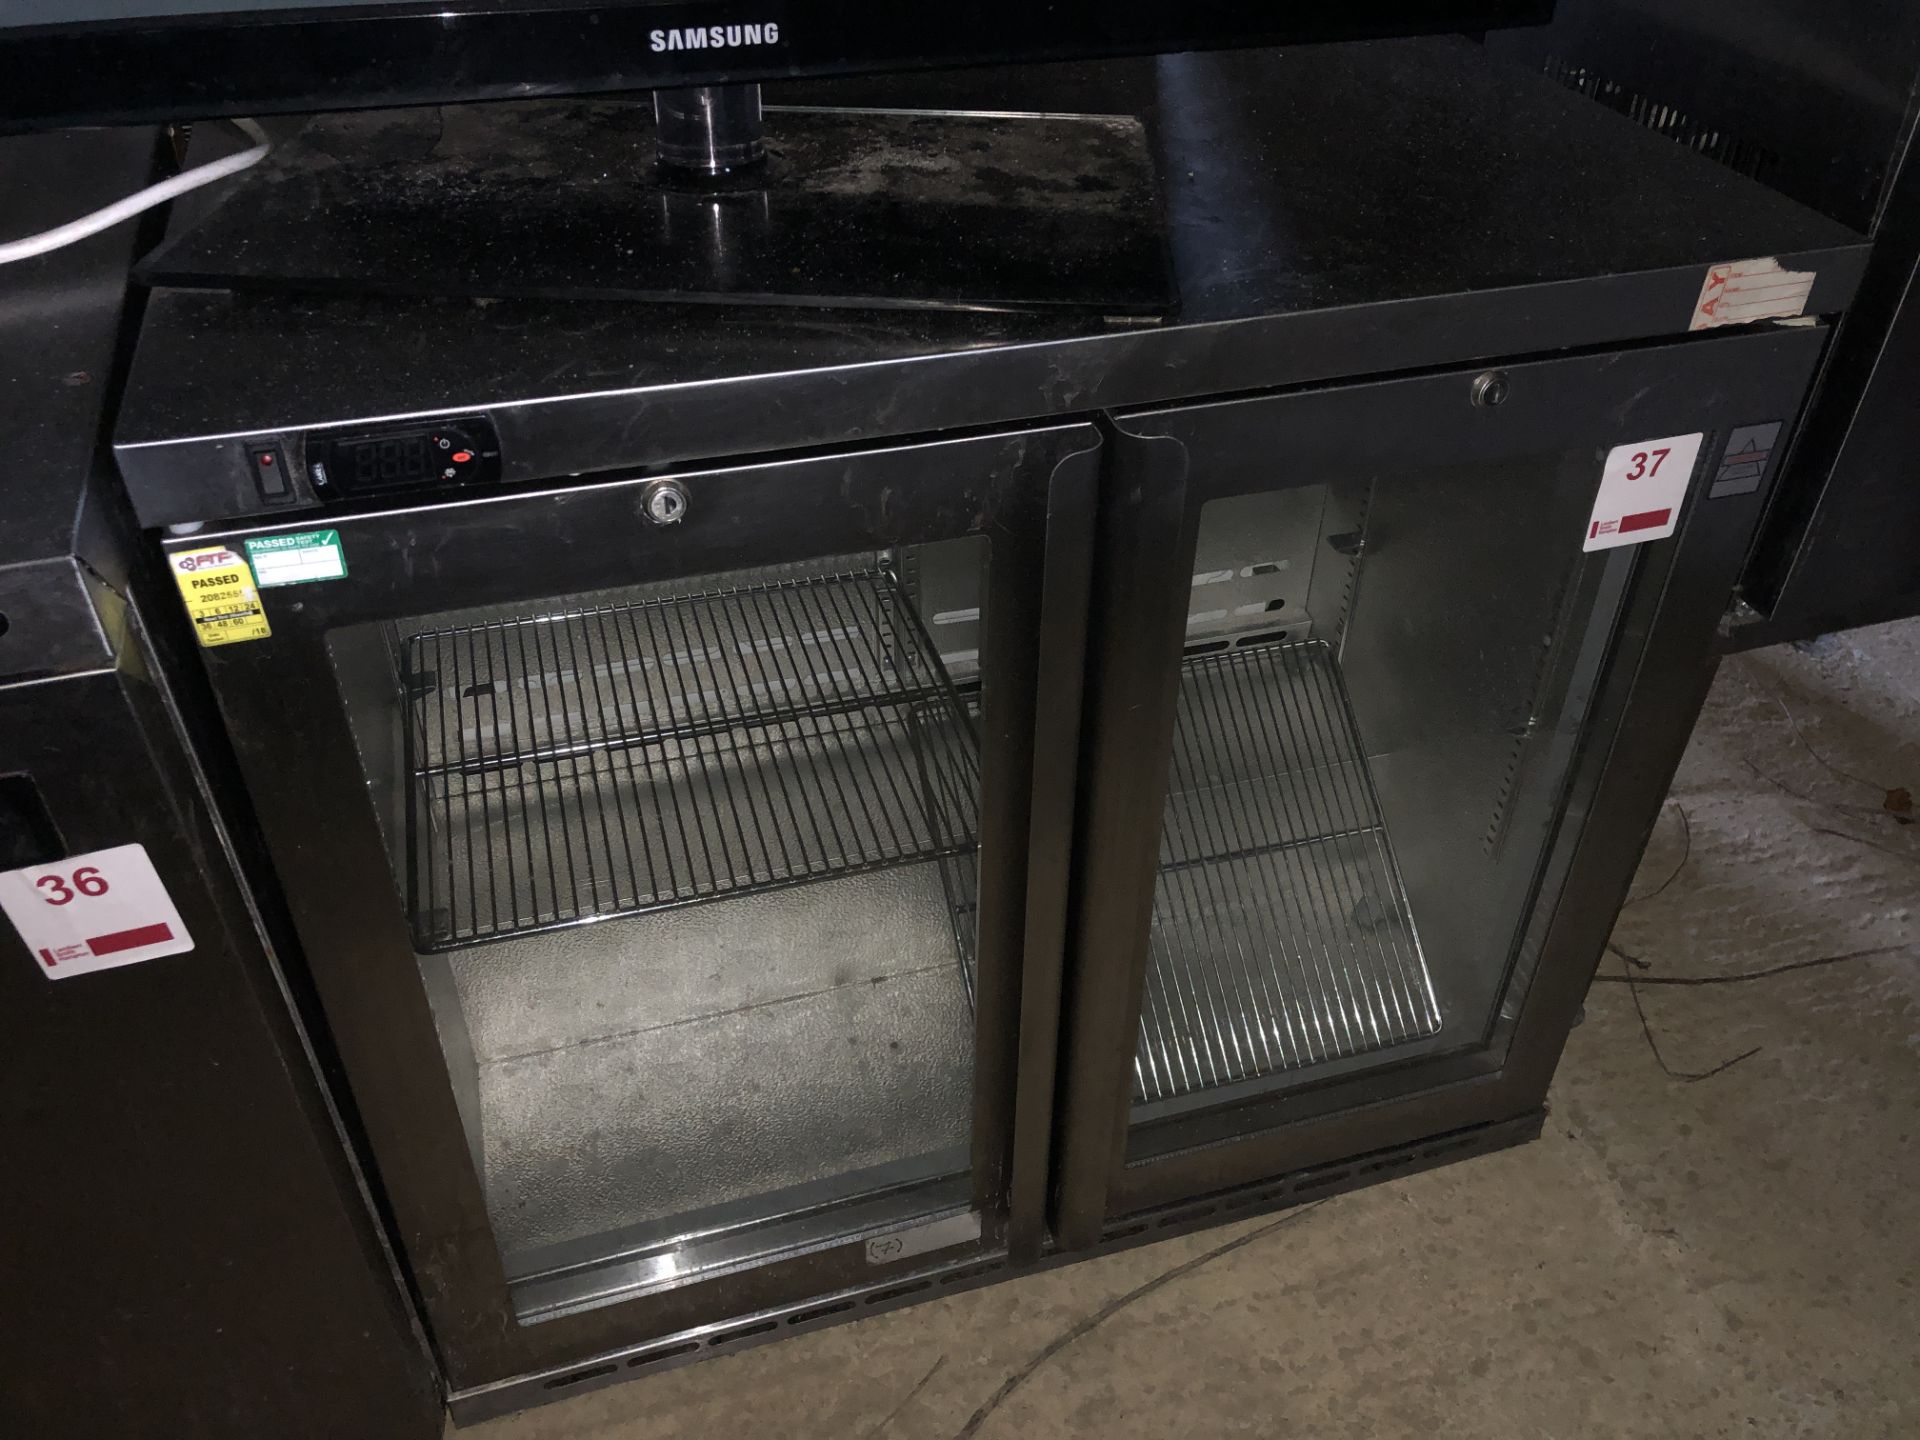 Osborne 220E stainless steel double door under counter display refrigerator, serial no. 221687/1016